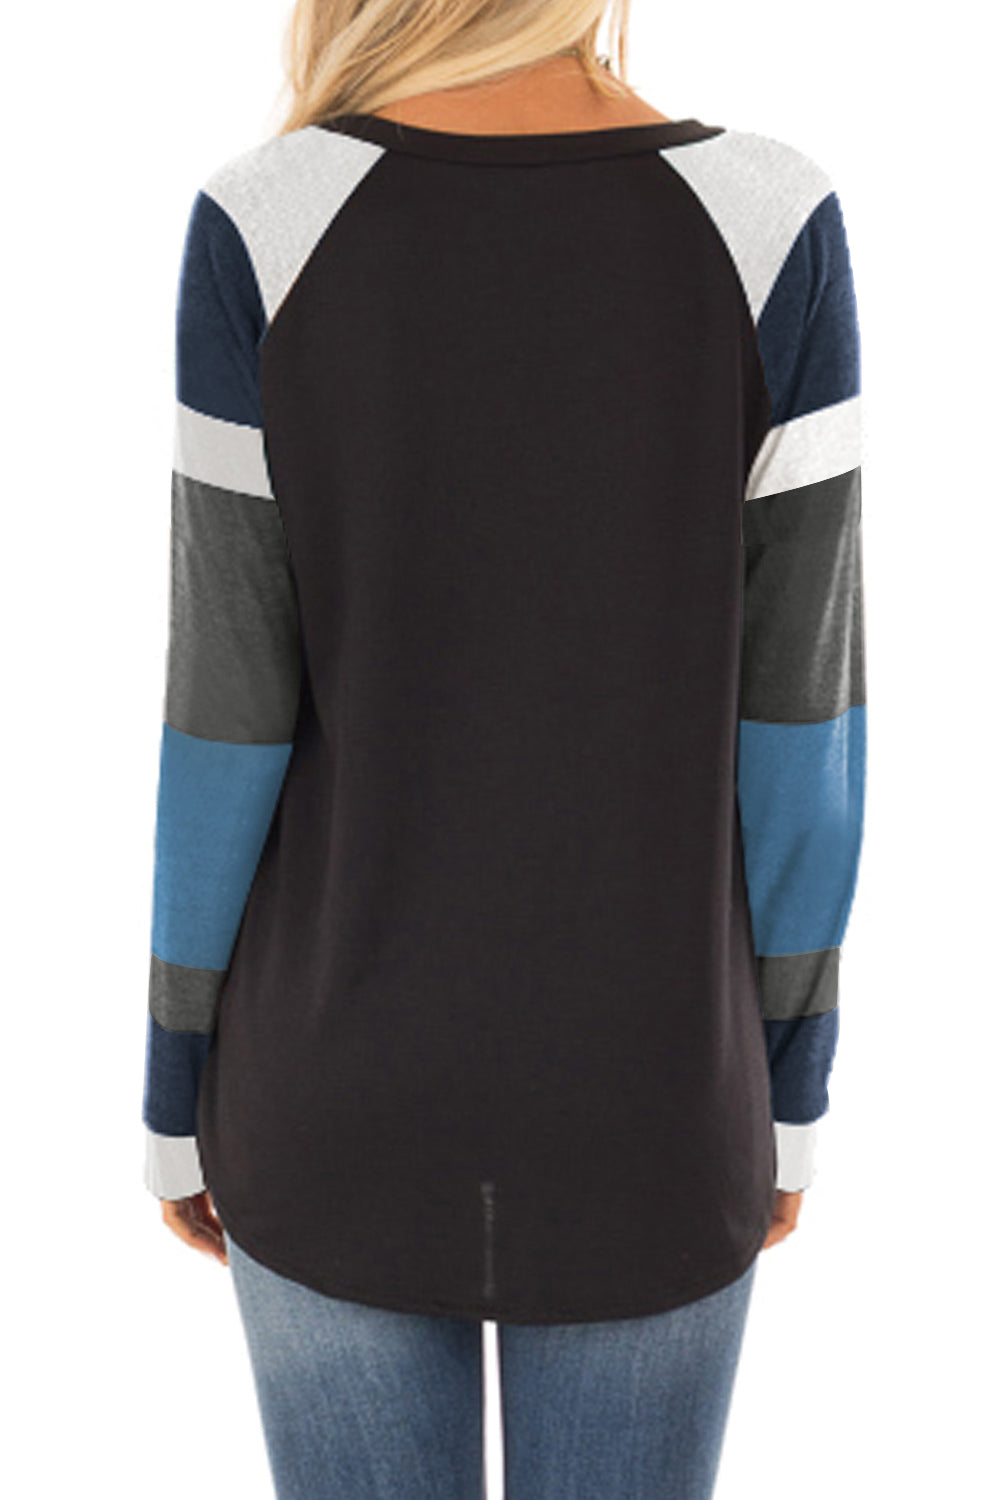 Color Block Long Sleeves Black Pullover Top